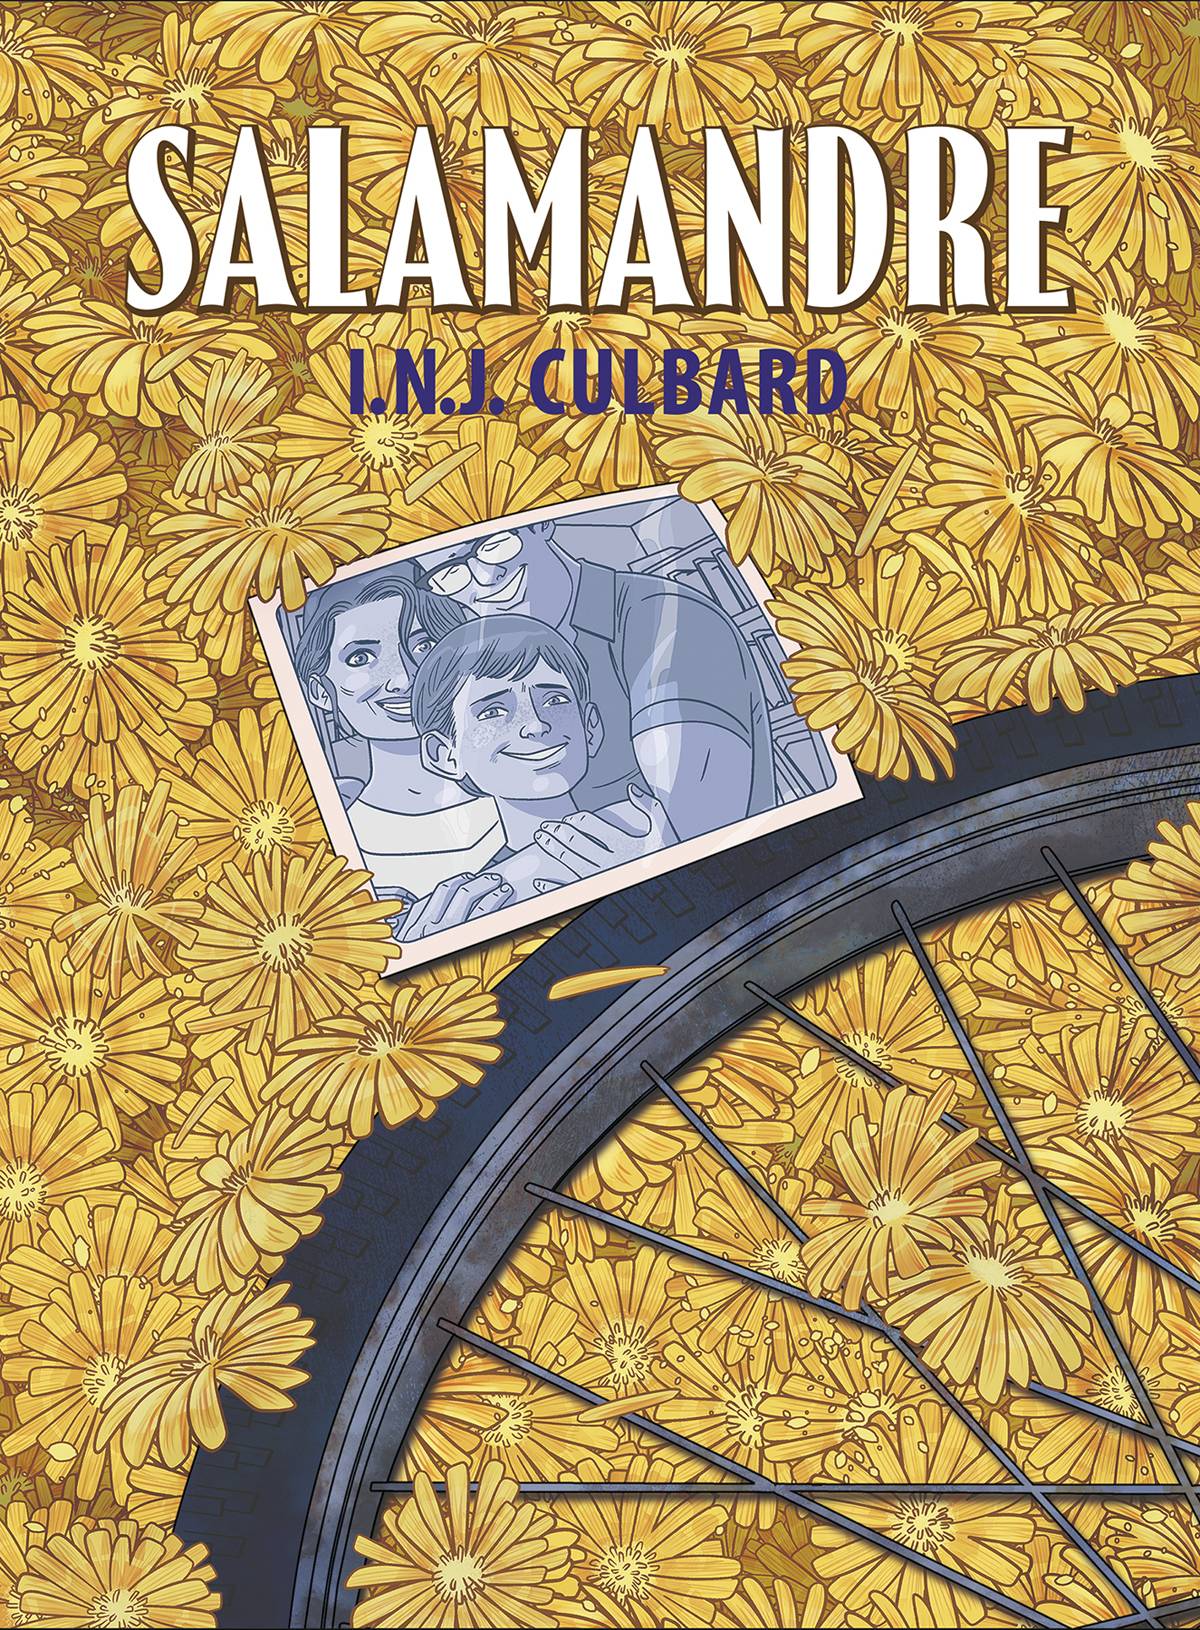 Salamandre s/c